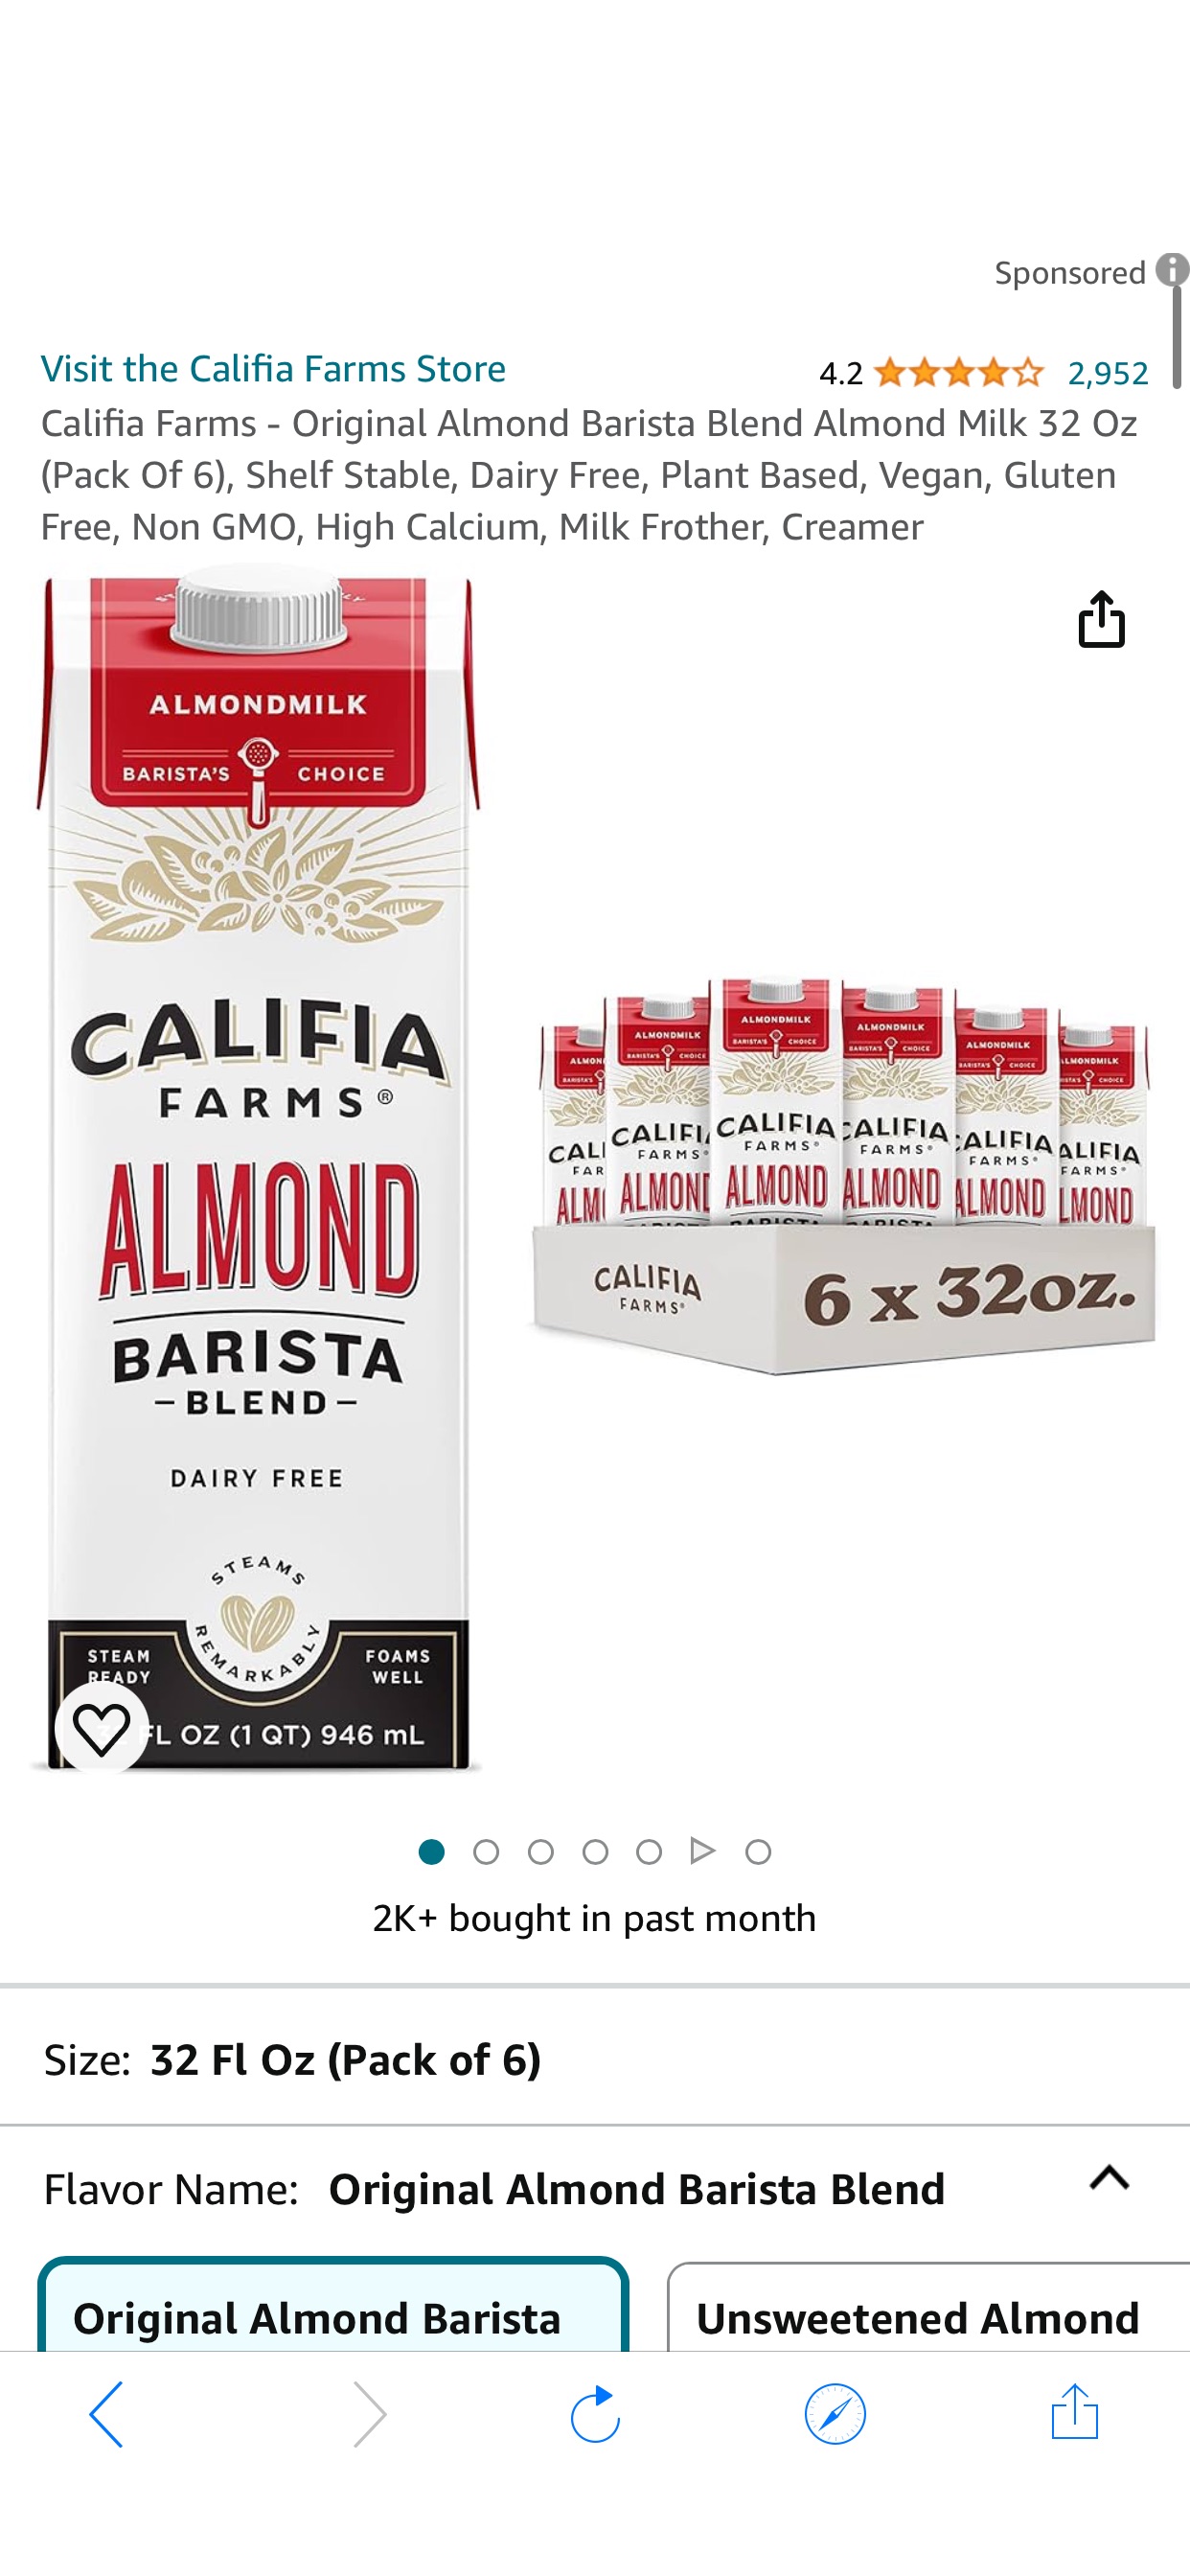 Amazon.com: Califia Farms - Original Almond Barista Blend Almond Milk 32 Oz (Pack Of 6), Shelf Stable, Dairy Free, Plant Based, Vegan, Gluten Free, Non GMO, High Calcium, Milk Frother, Creamer : Groce